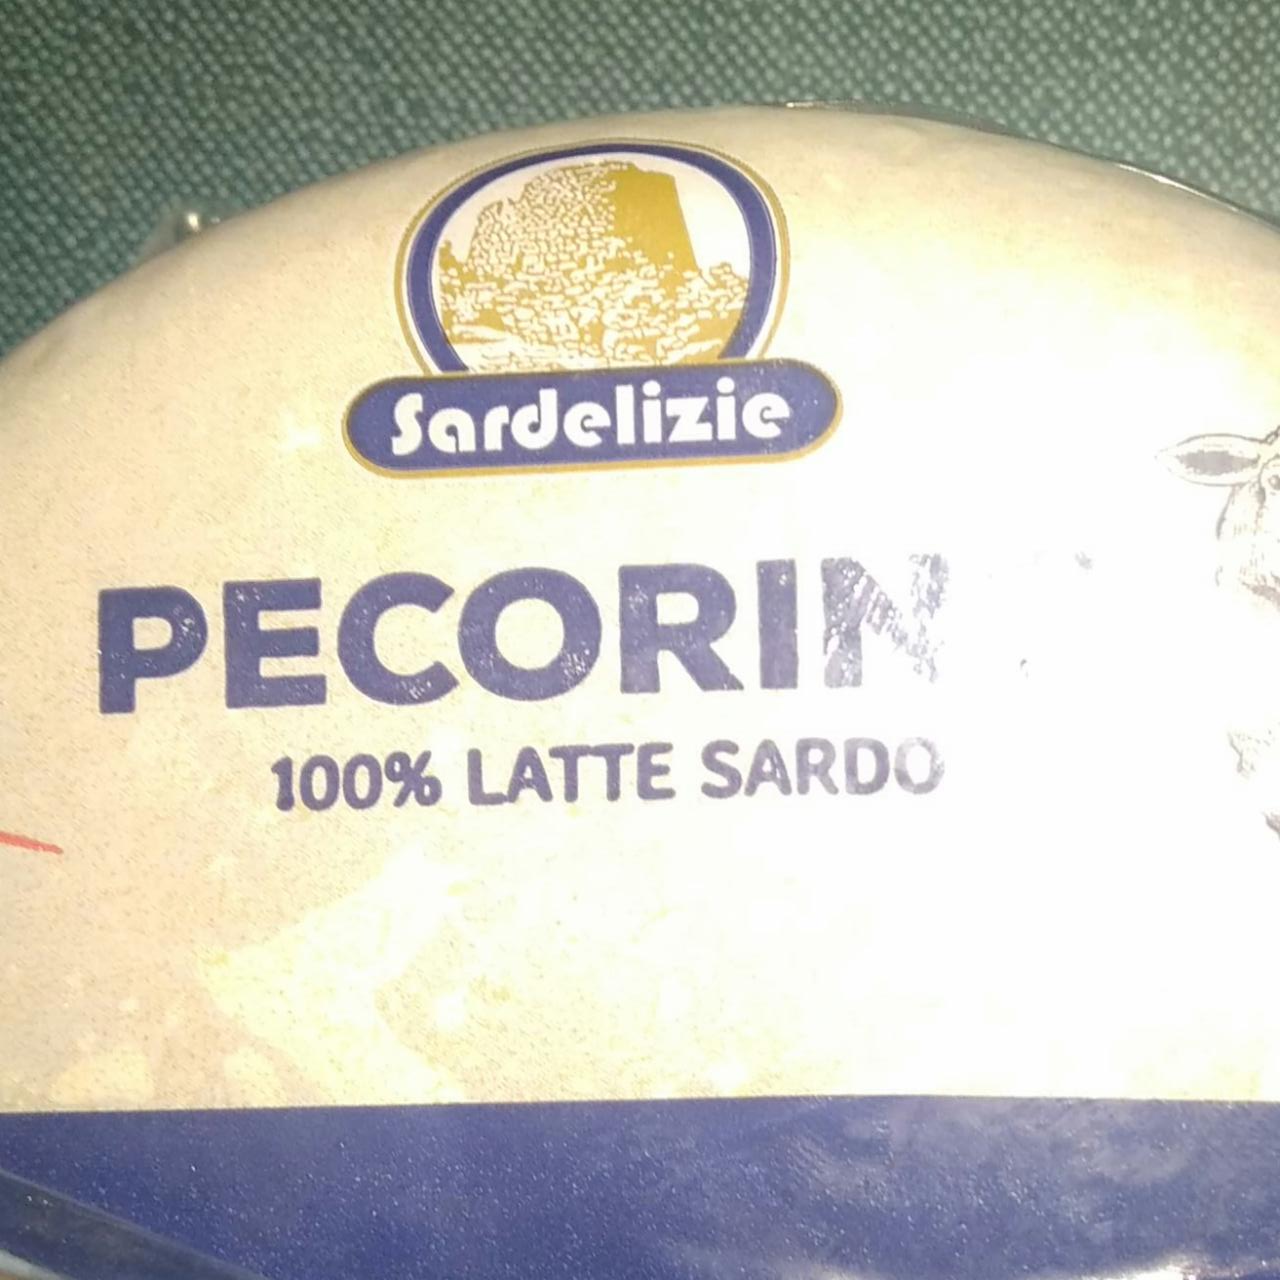 Fotografie - Pecorino 100% latte sardo Sardelizie